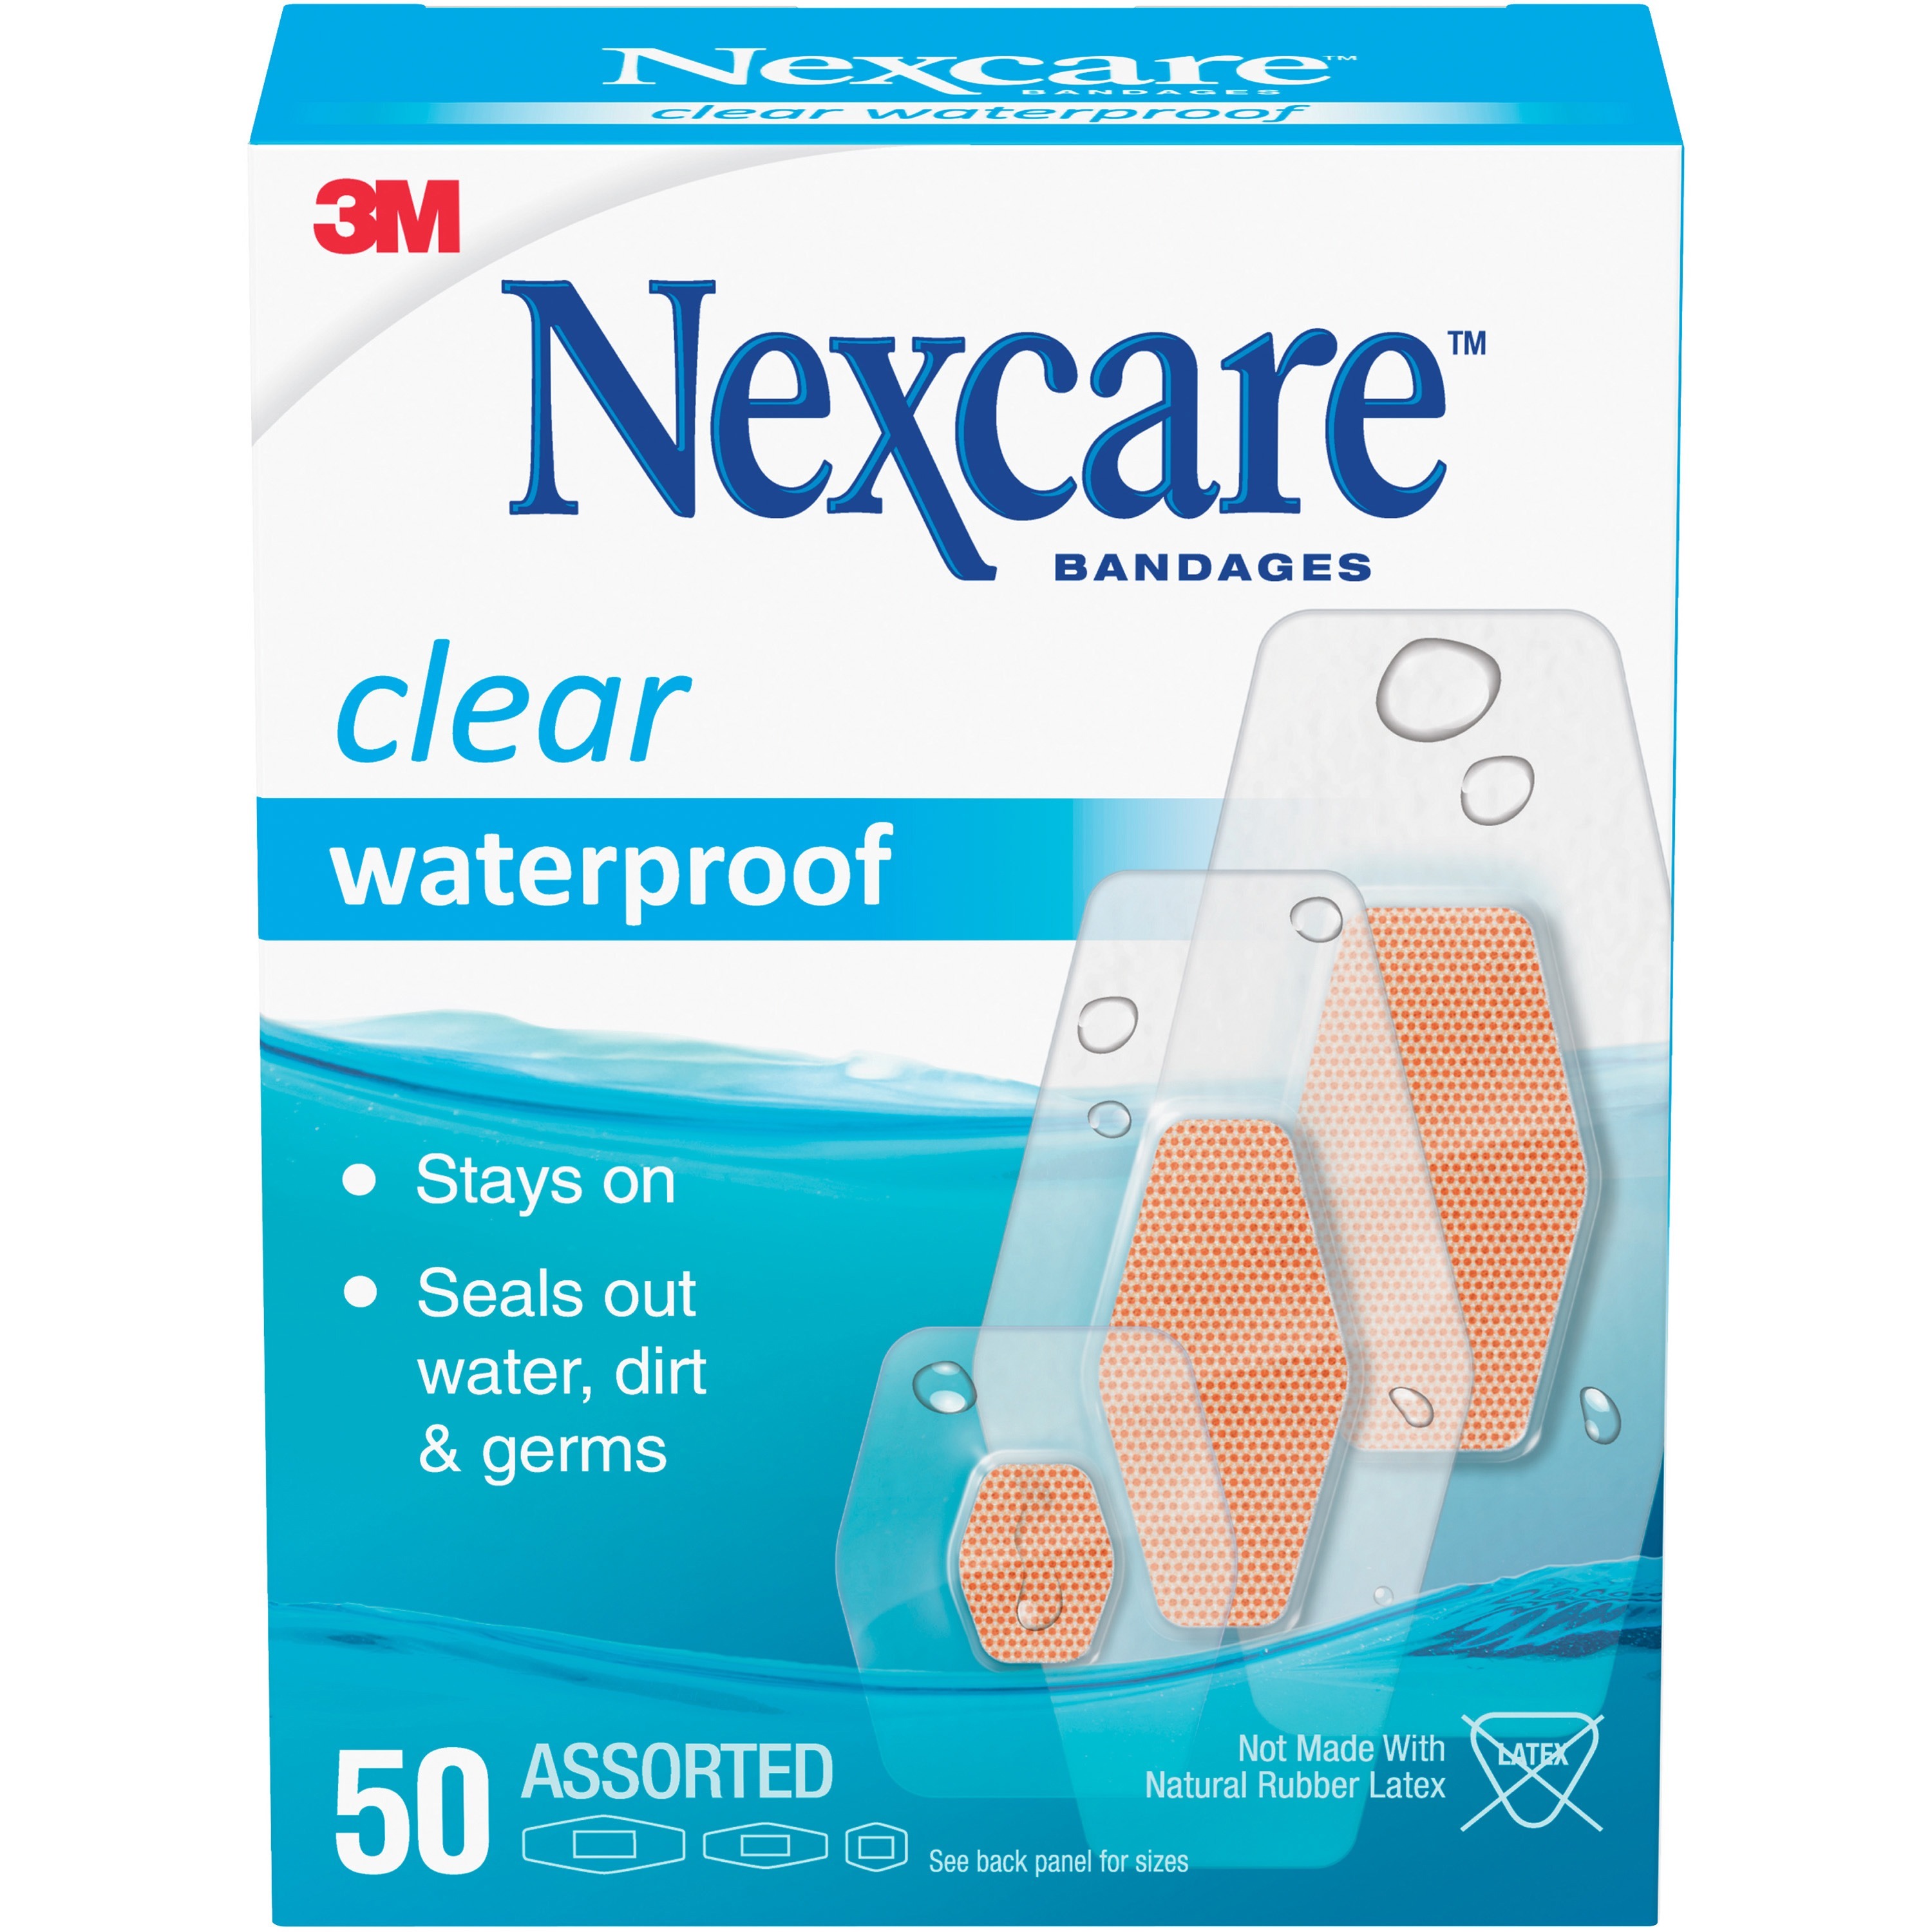 Nexcare Waterproof Bandages - 50/Box - ClearMMM43250, MMM 43250